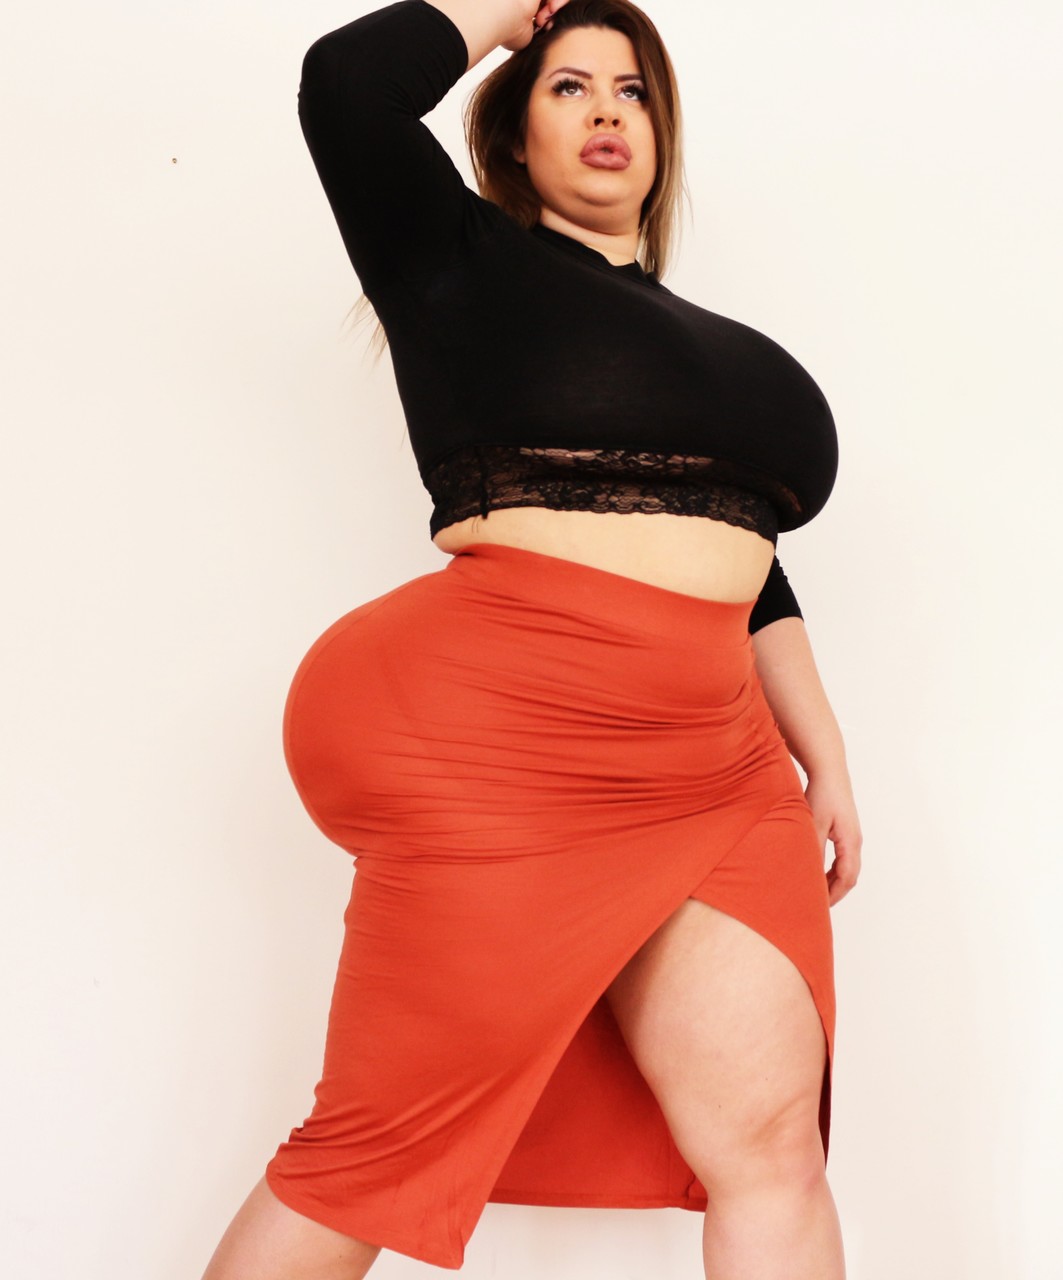 Stunning MILF fatty Natasha Crown flaunting her very big ass in a tight skirt foto porno #423816656 | Natasha Crown Pics, Natasha Crown, BBW, porno mobile